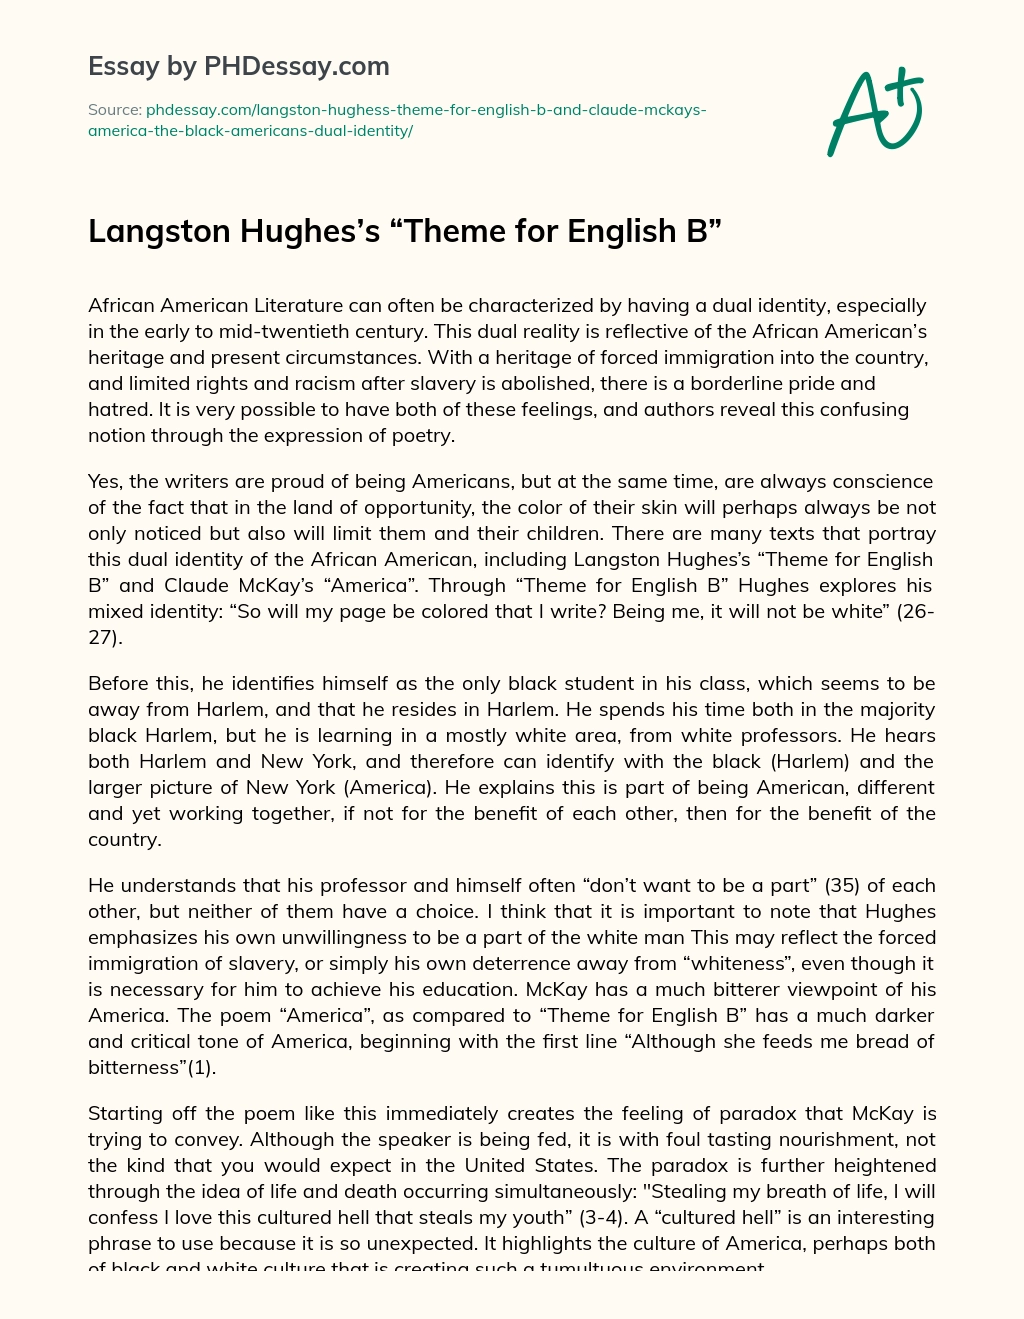 Langston Hughes’s “Theme for English B” essay